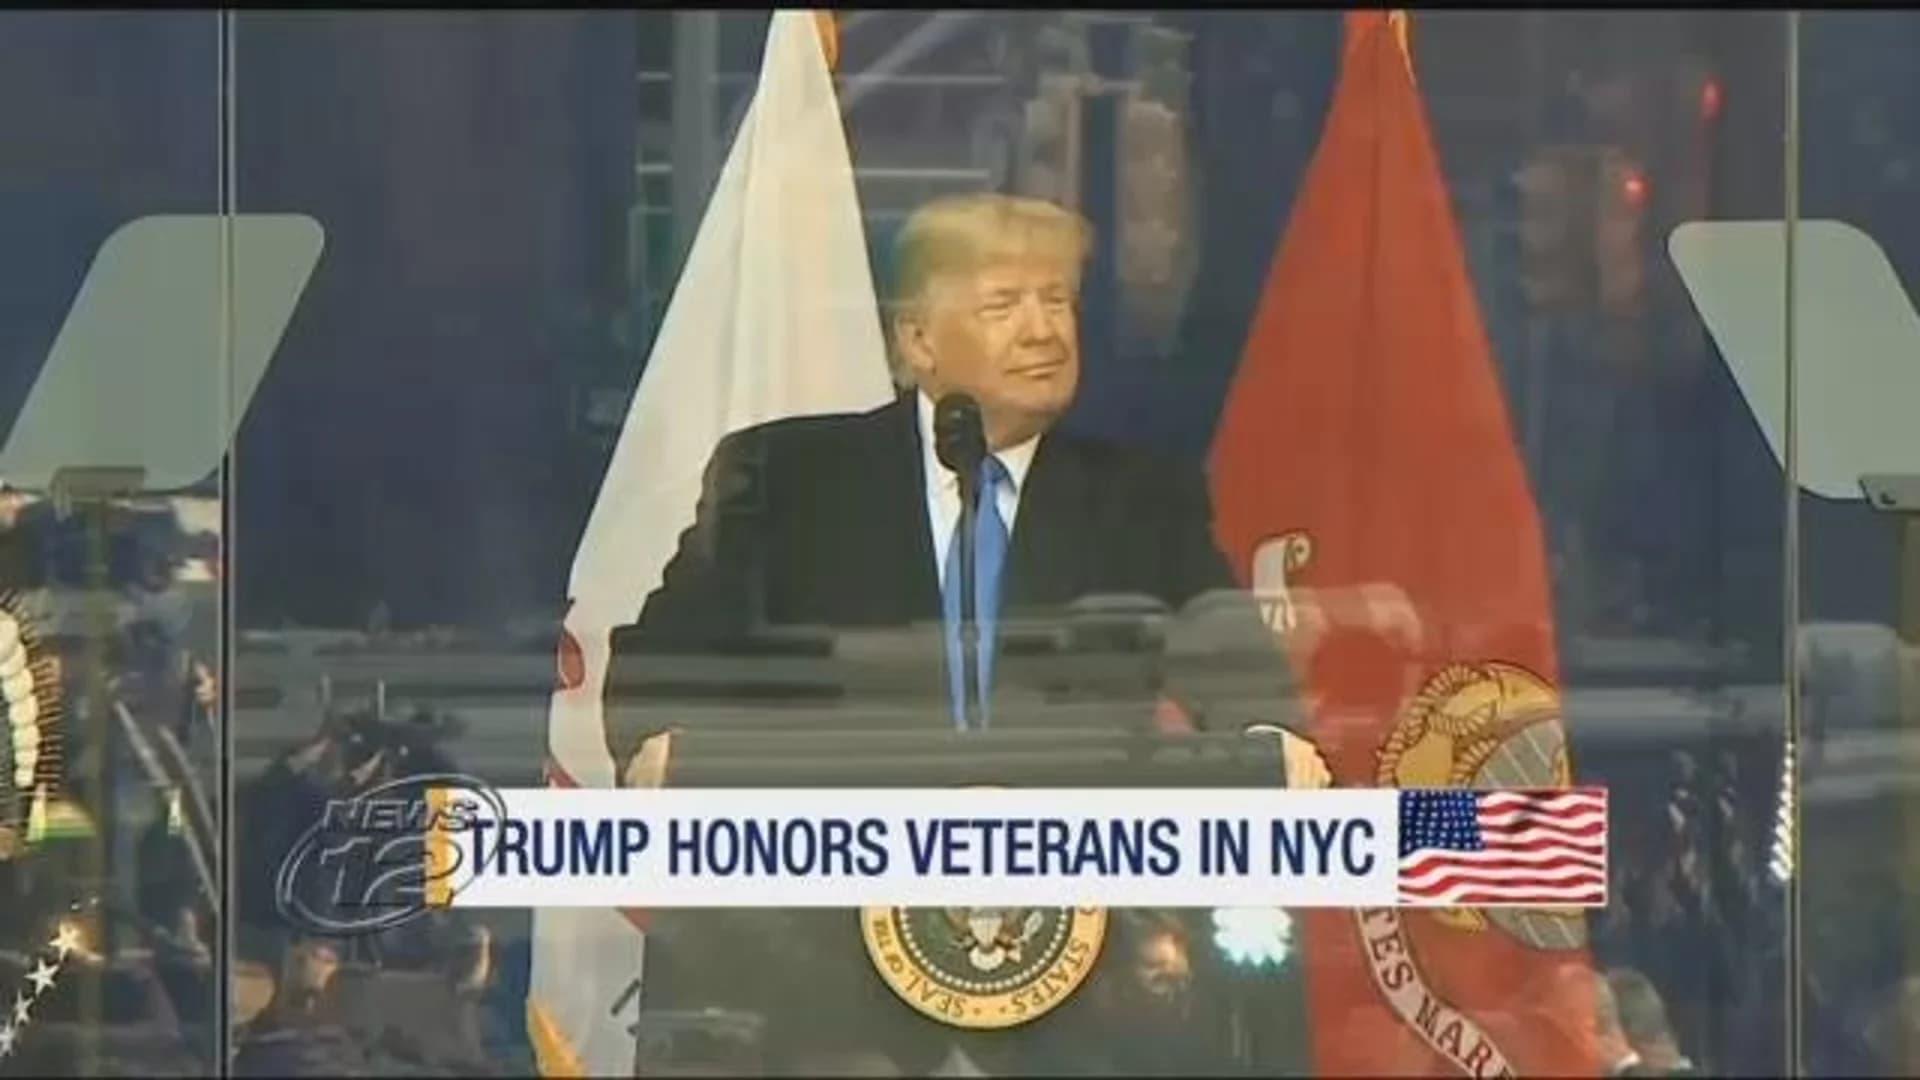 Trump kicks off Veterans Day tribute in NYC